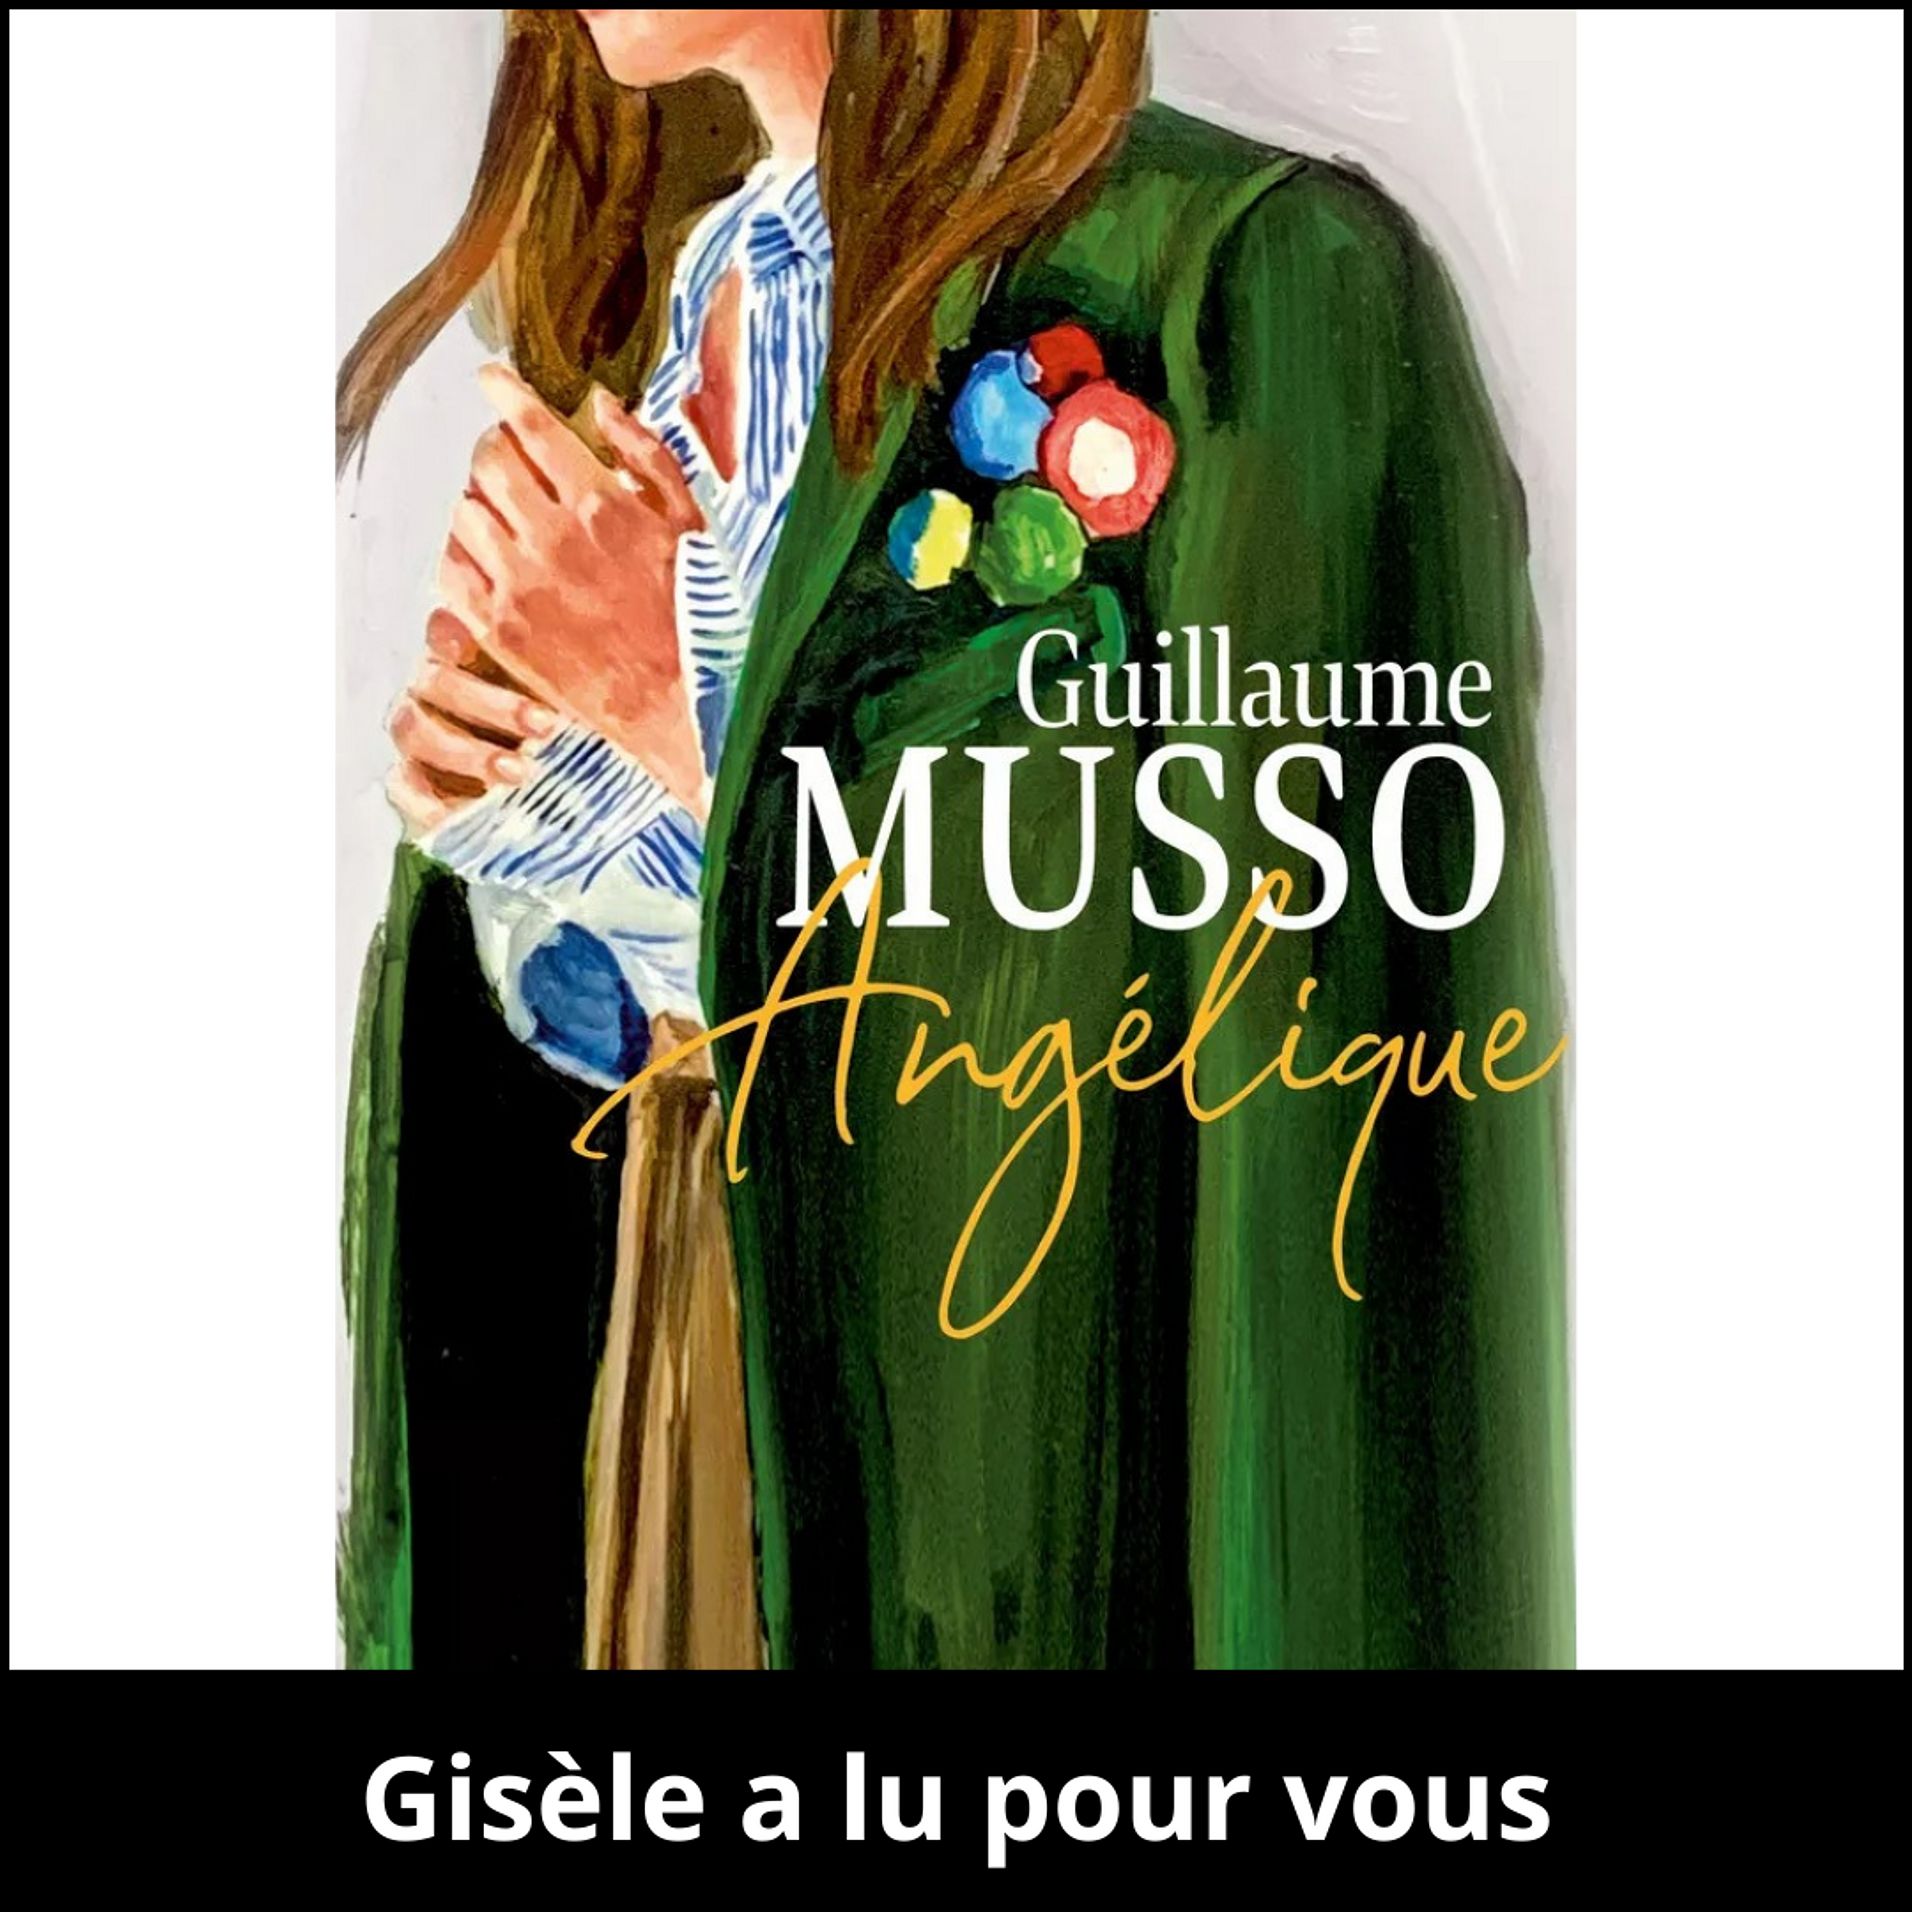 Angélique by Guillaume Musso